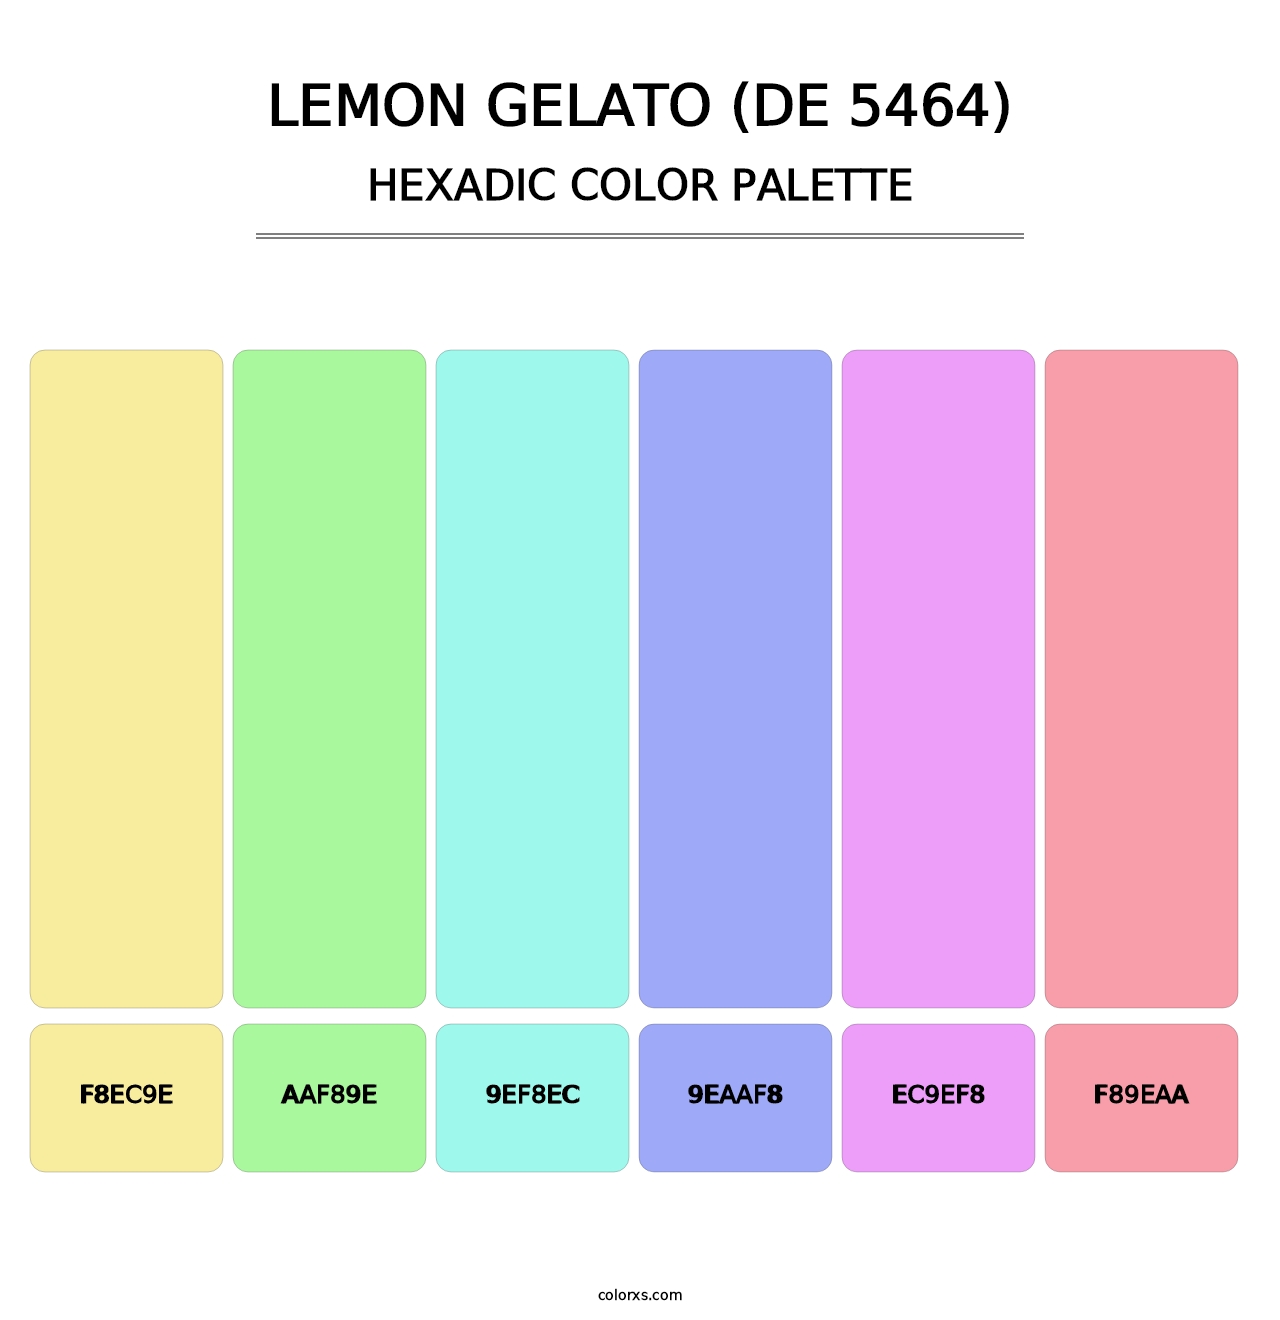 Lemon Gelato (DE 5464) - Hexadic Color Palette